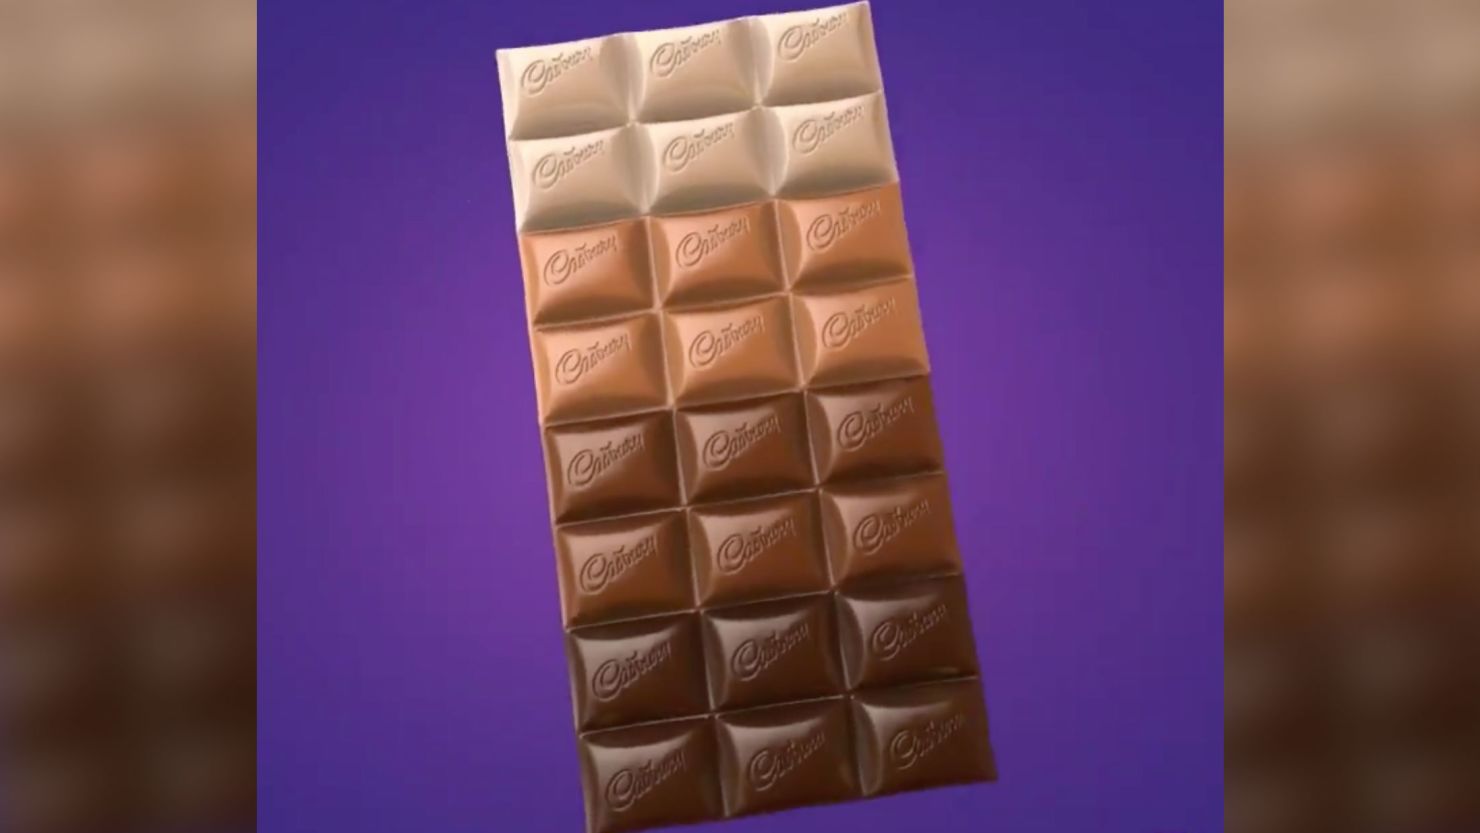 Cadbury's 'Unity' chocolate bar criticized as trivializing racial division